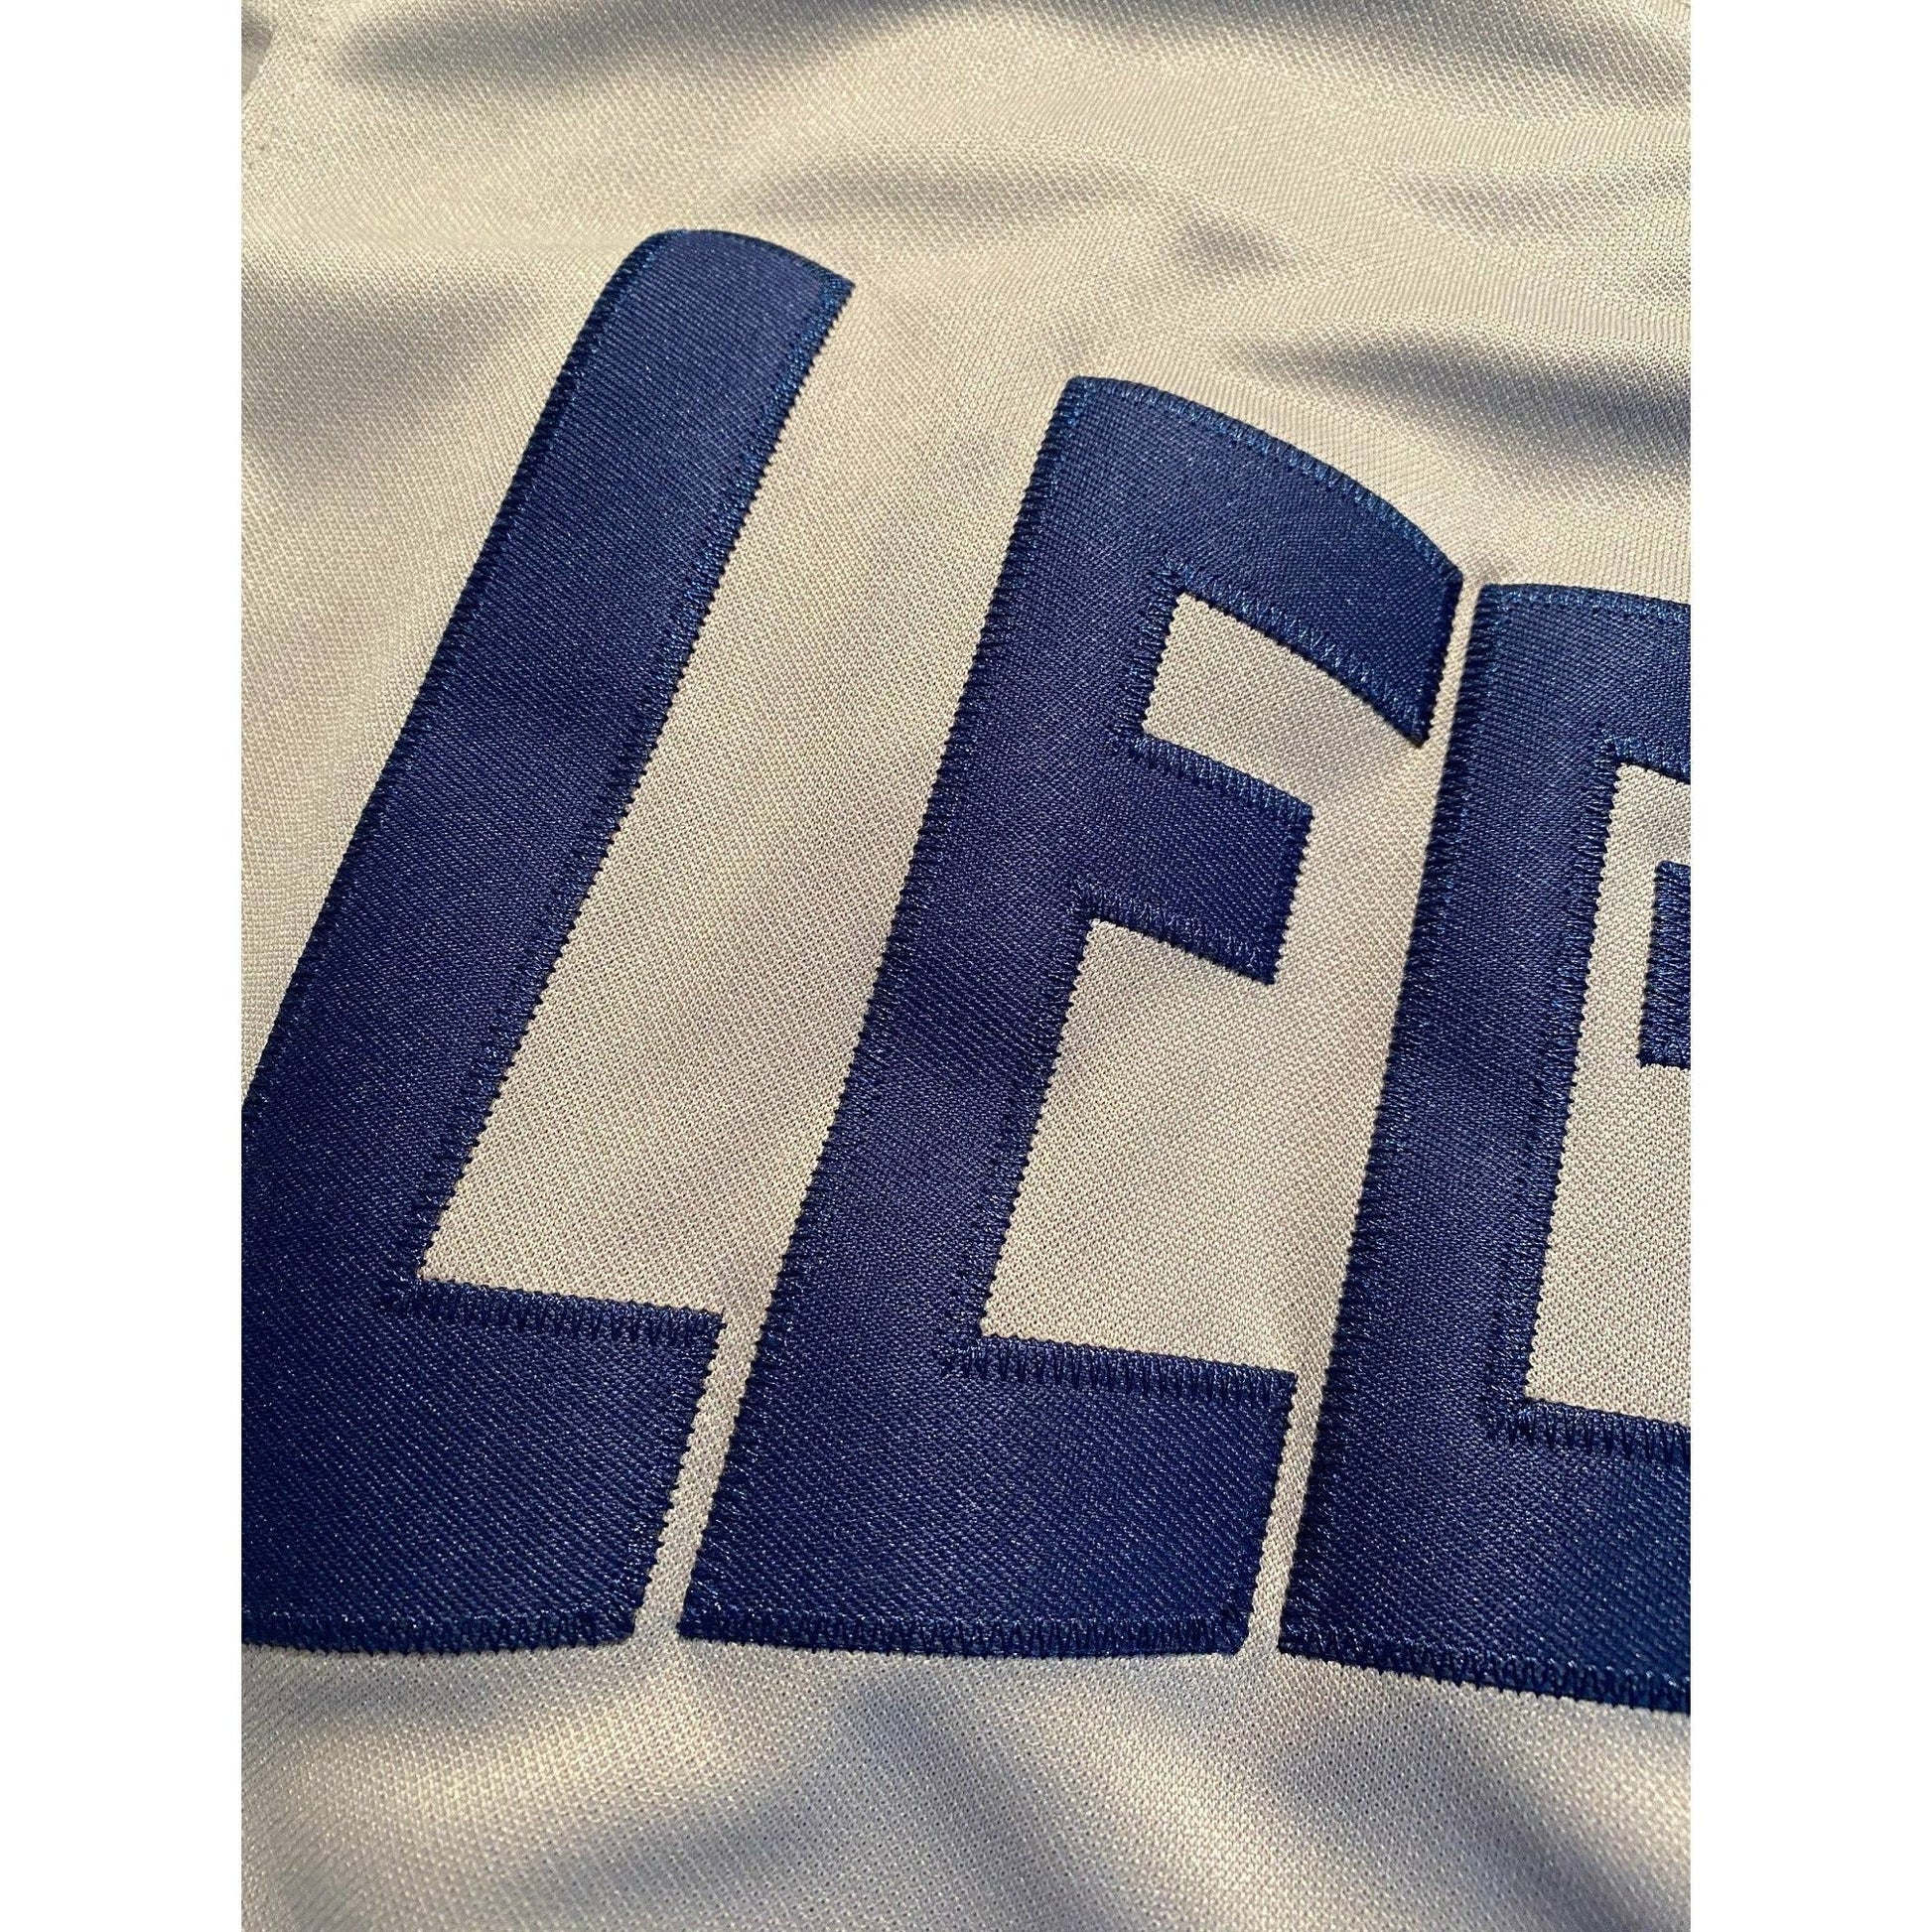 st lucie legends vida blue jersey